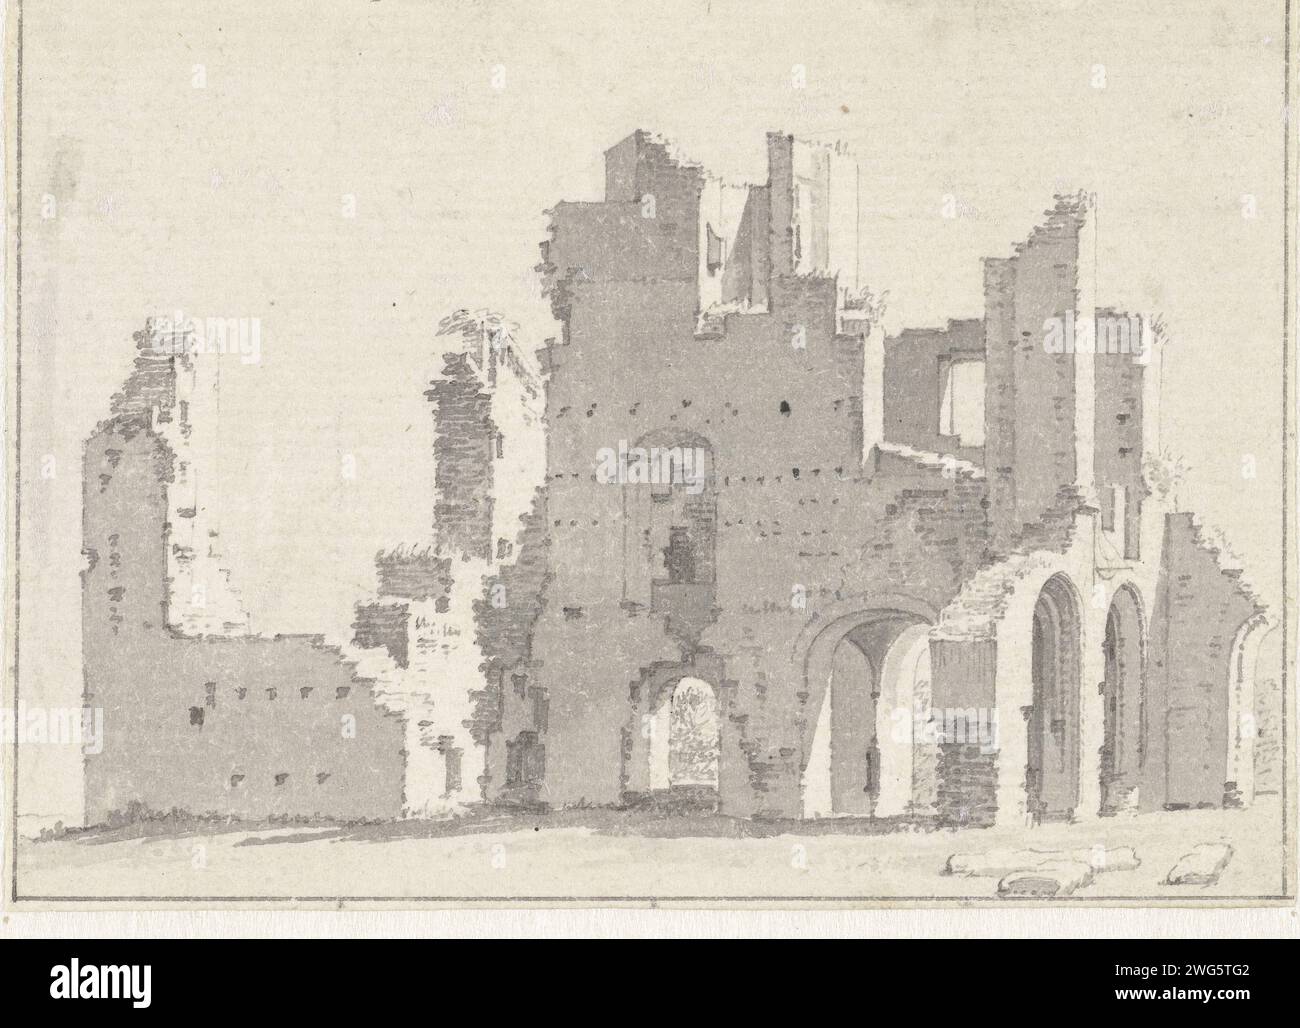 The ruins of the A -Bij in Rijnsburg, Cornelis Pronk, 1725 - 1745 drawing   paper. ink pen / brush ruin of church, monastery, etc. Rijnsburg Stock Photo